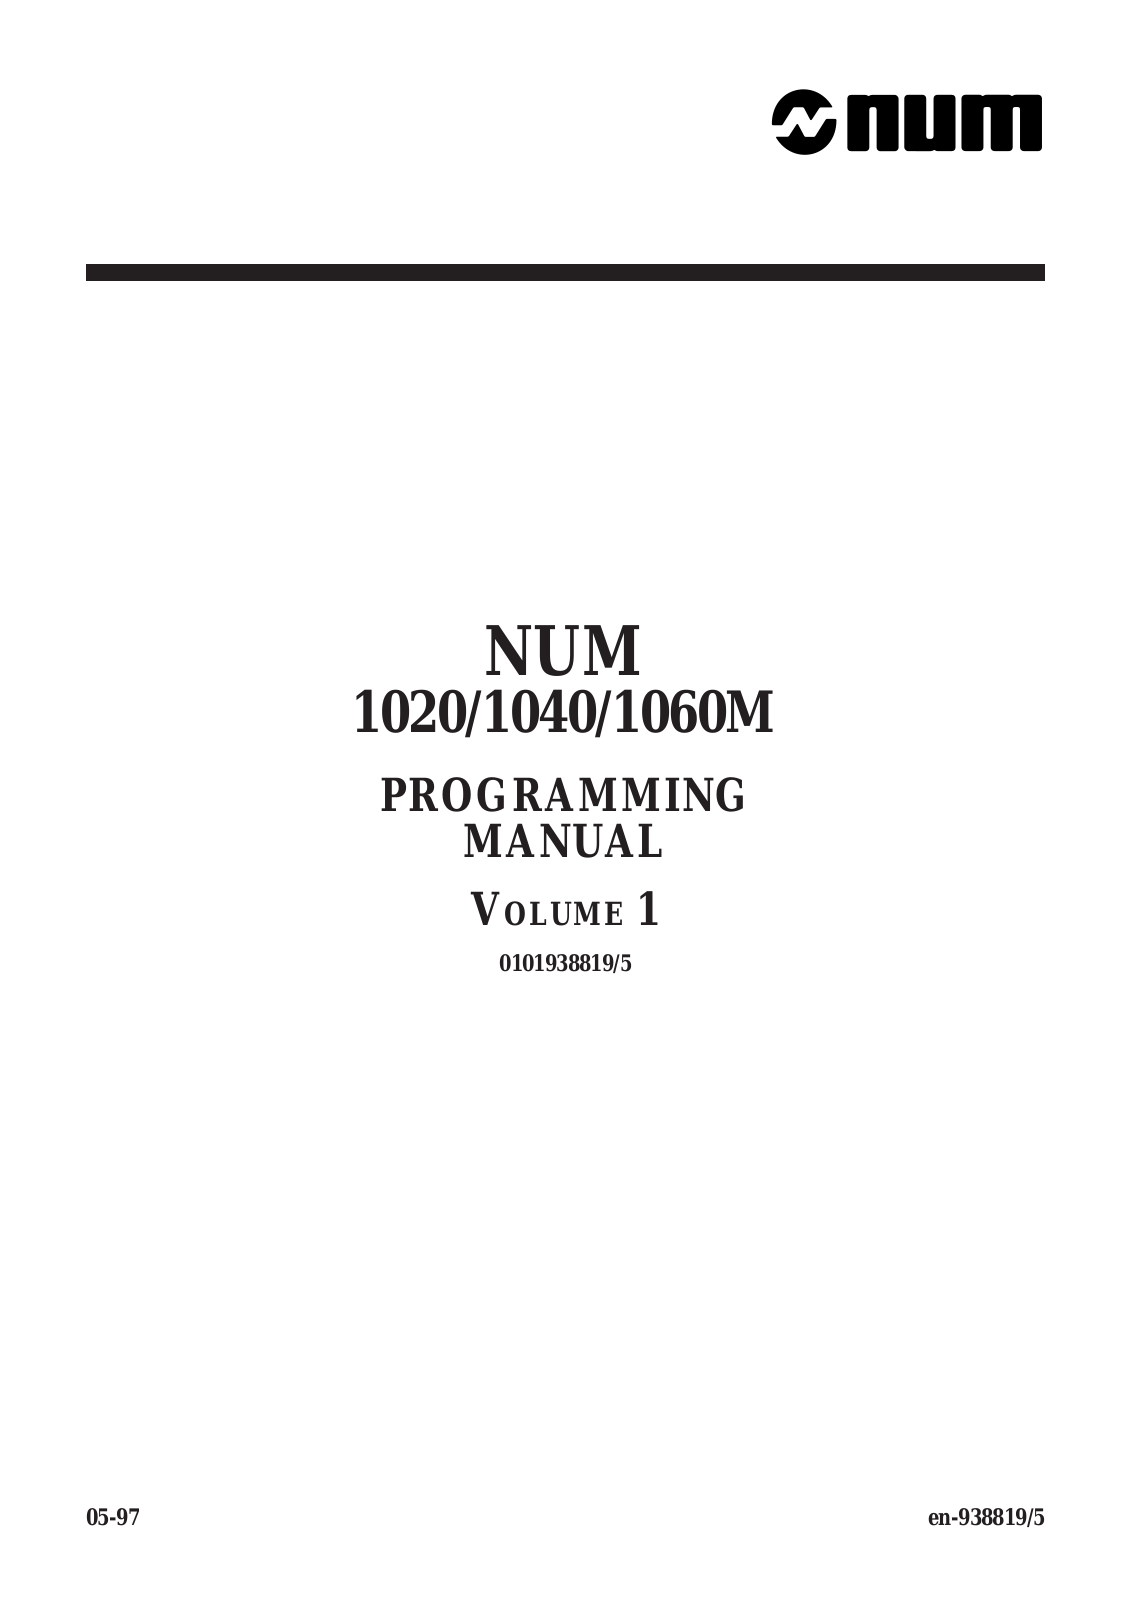 num 1020M, 1040M, 1060 M Programming Manual